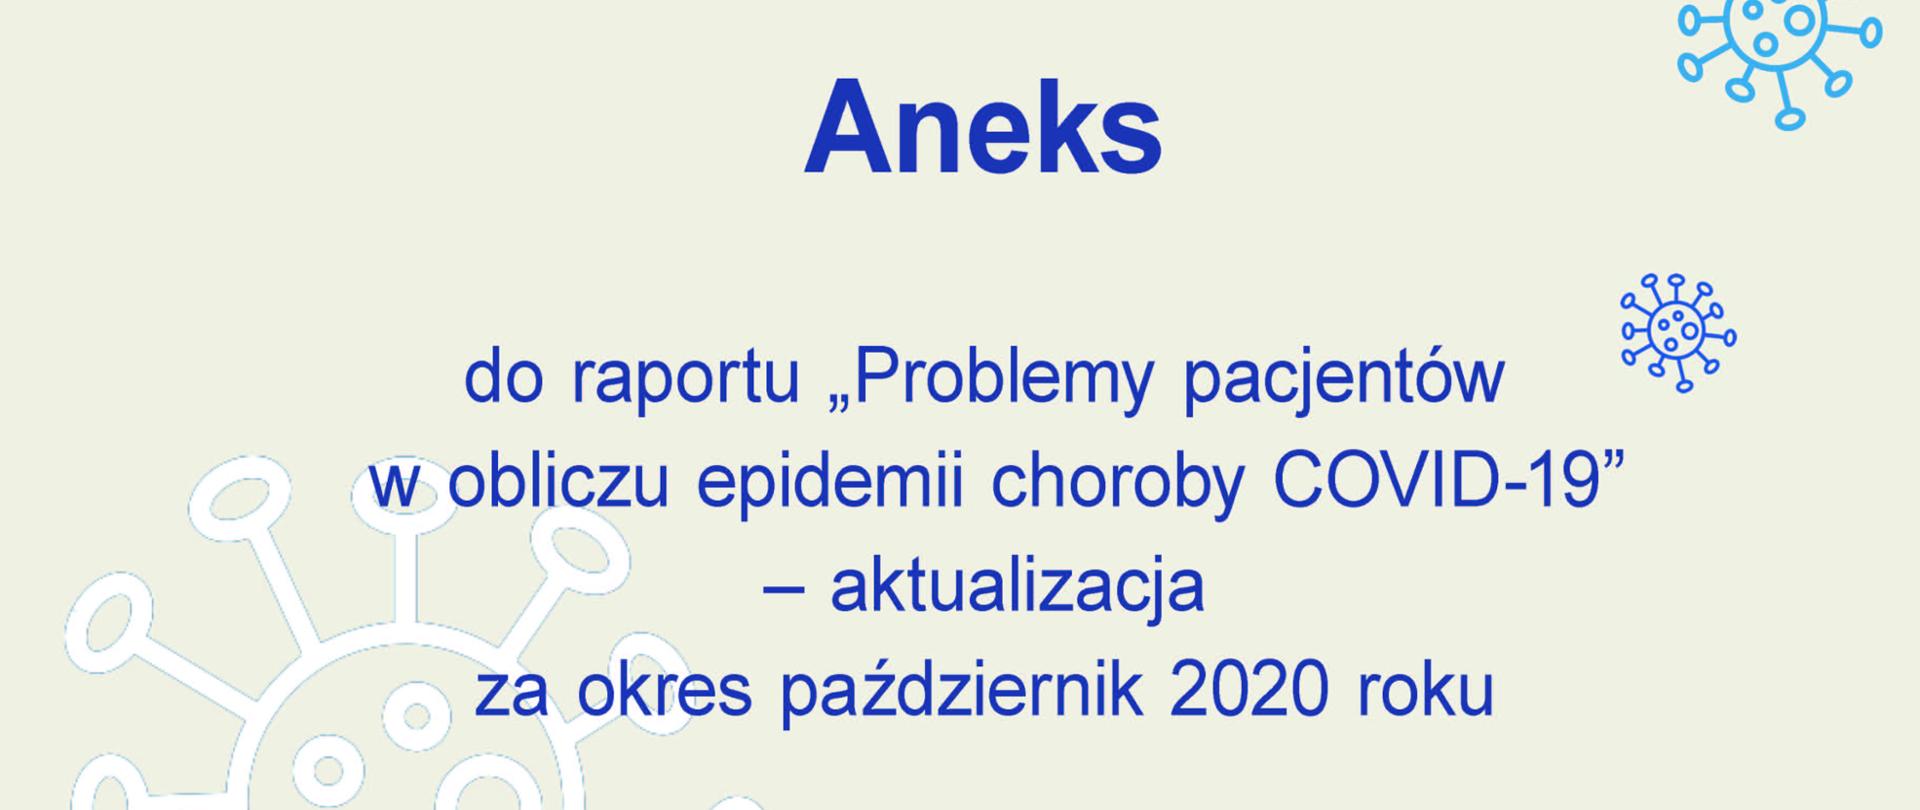 Aneks COVID-19